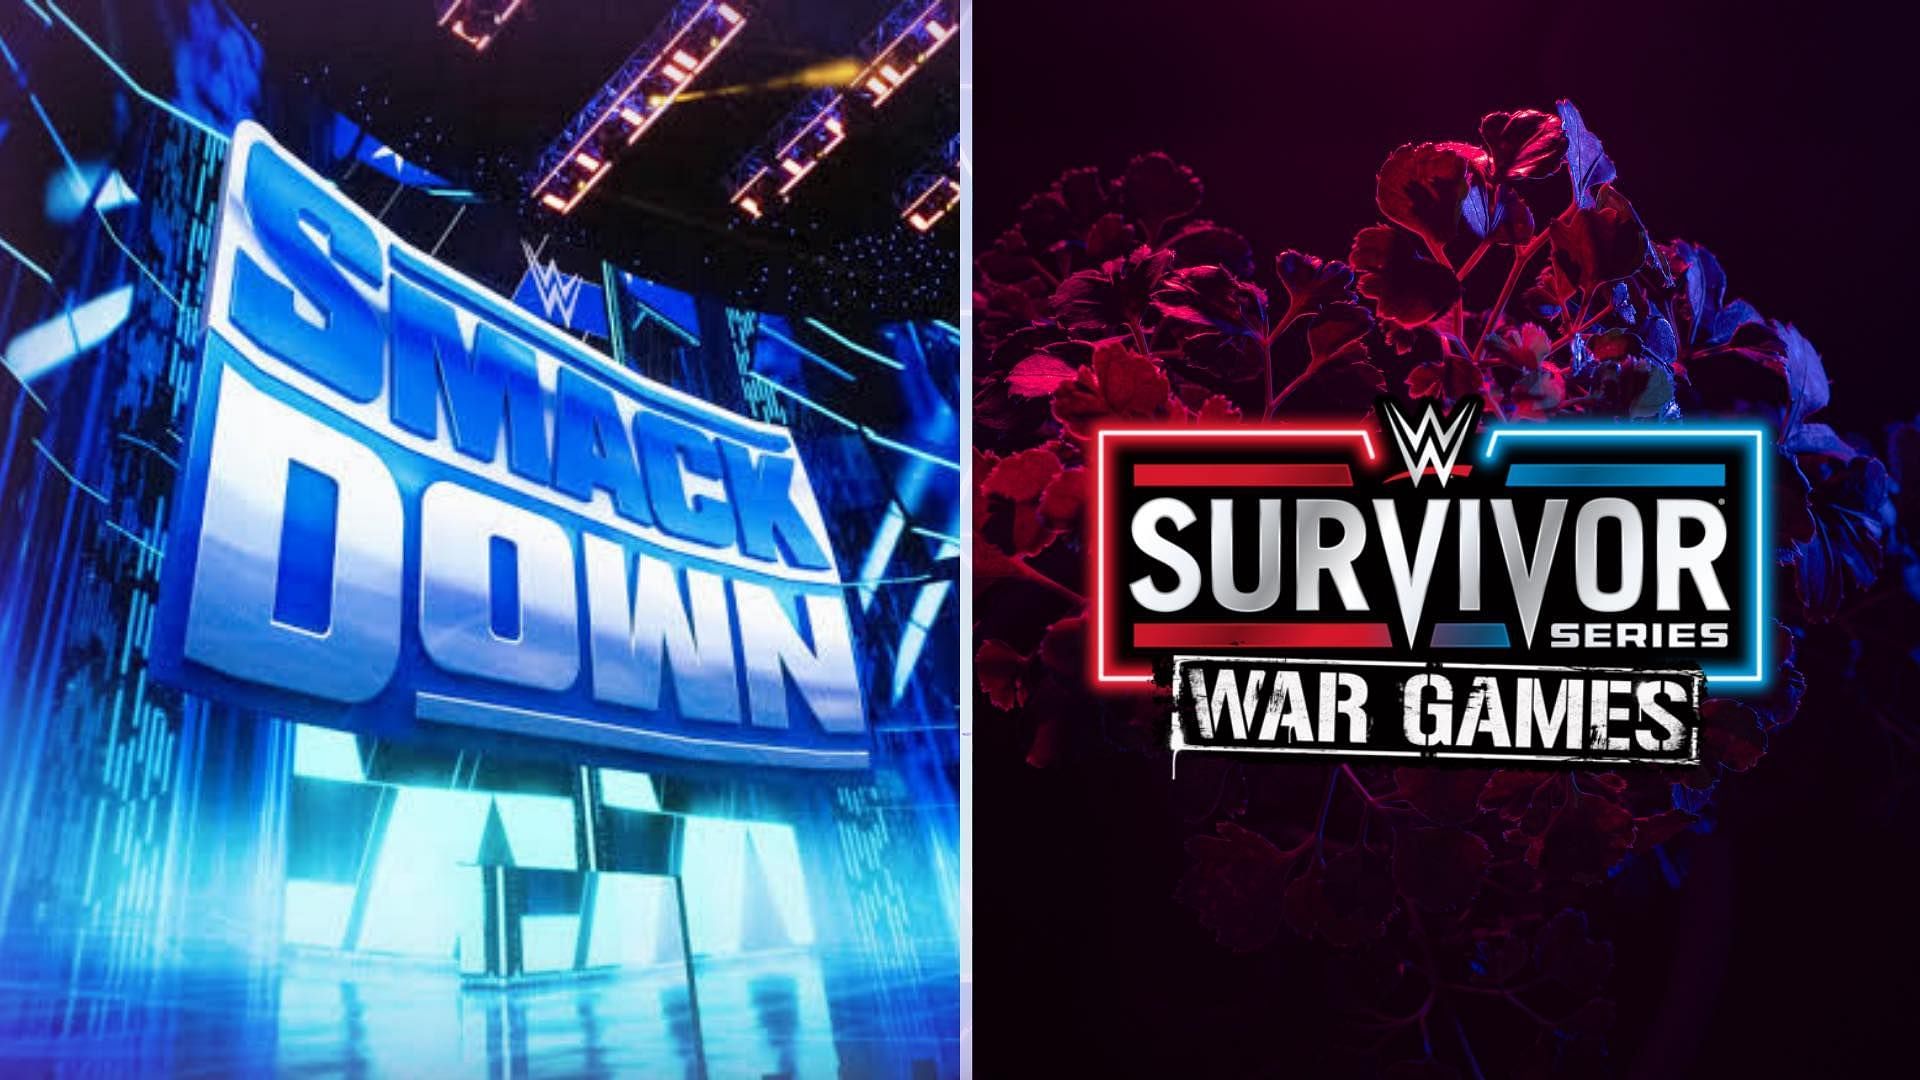 Popular WWE star brutally assaulted backstage ahead of potential Survivor Series: WarGames match